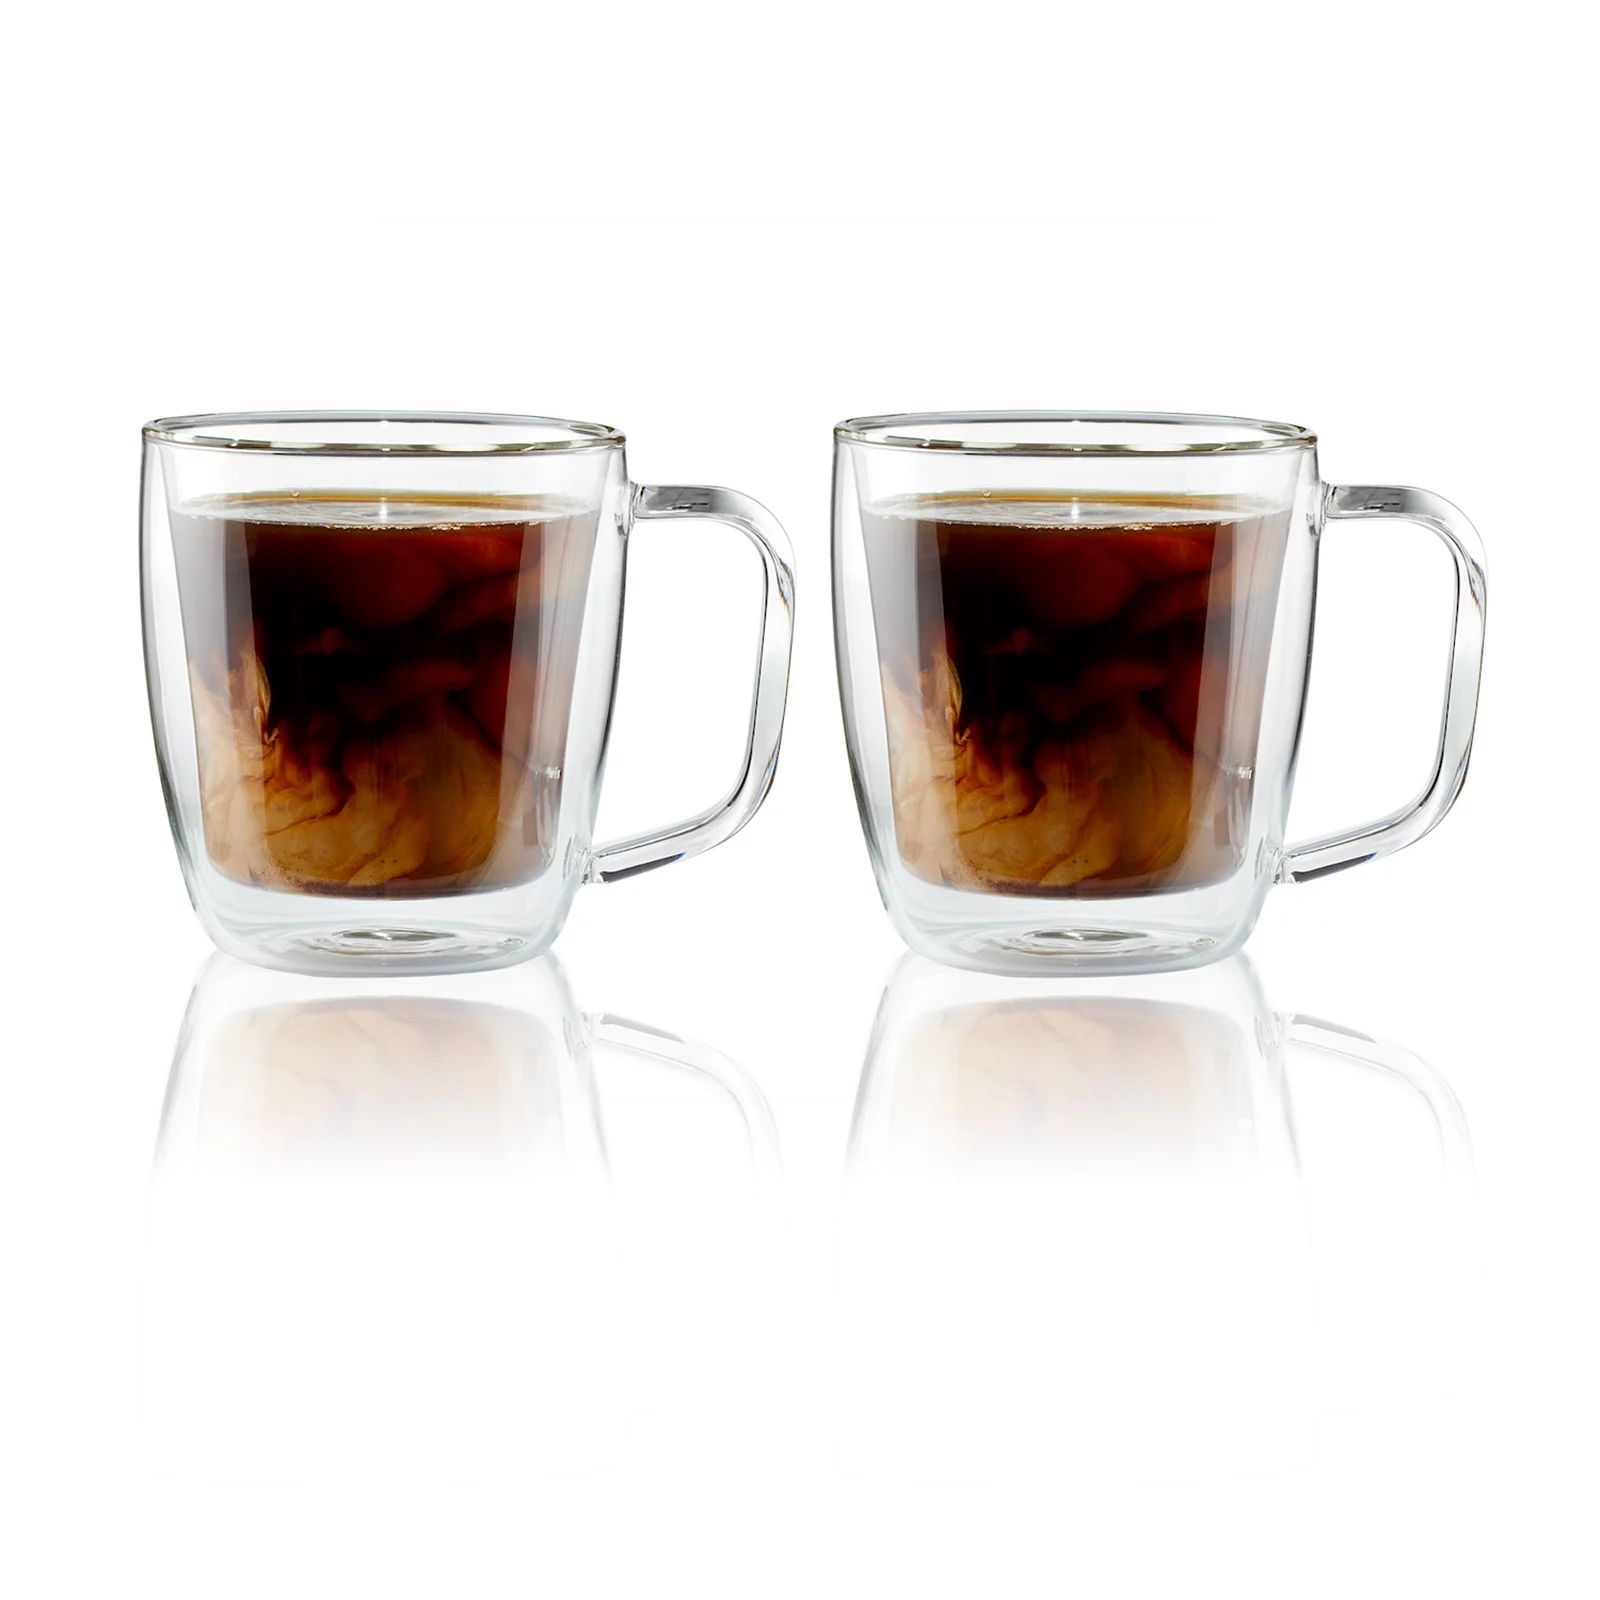 J.A. Henckels International 2 pc. Double-Wall Glass Coffee Mug Set, Multicolor | Kohl's